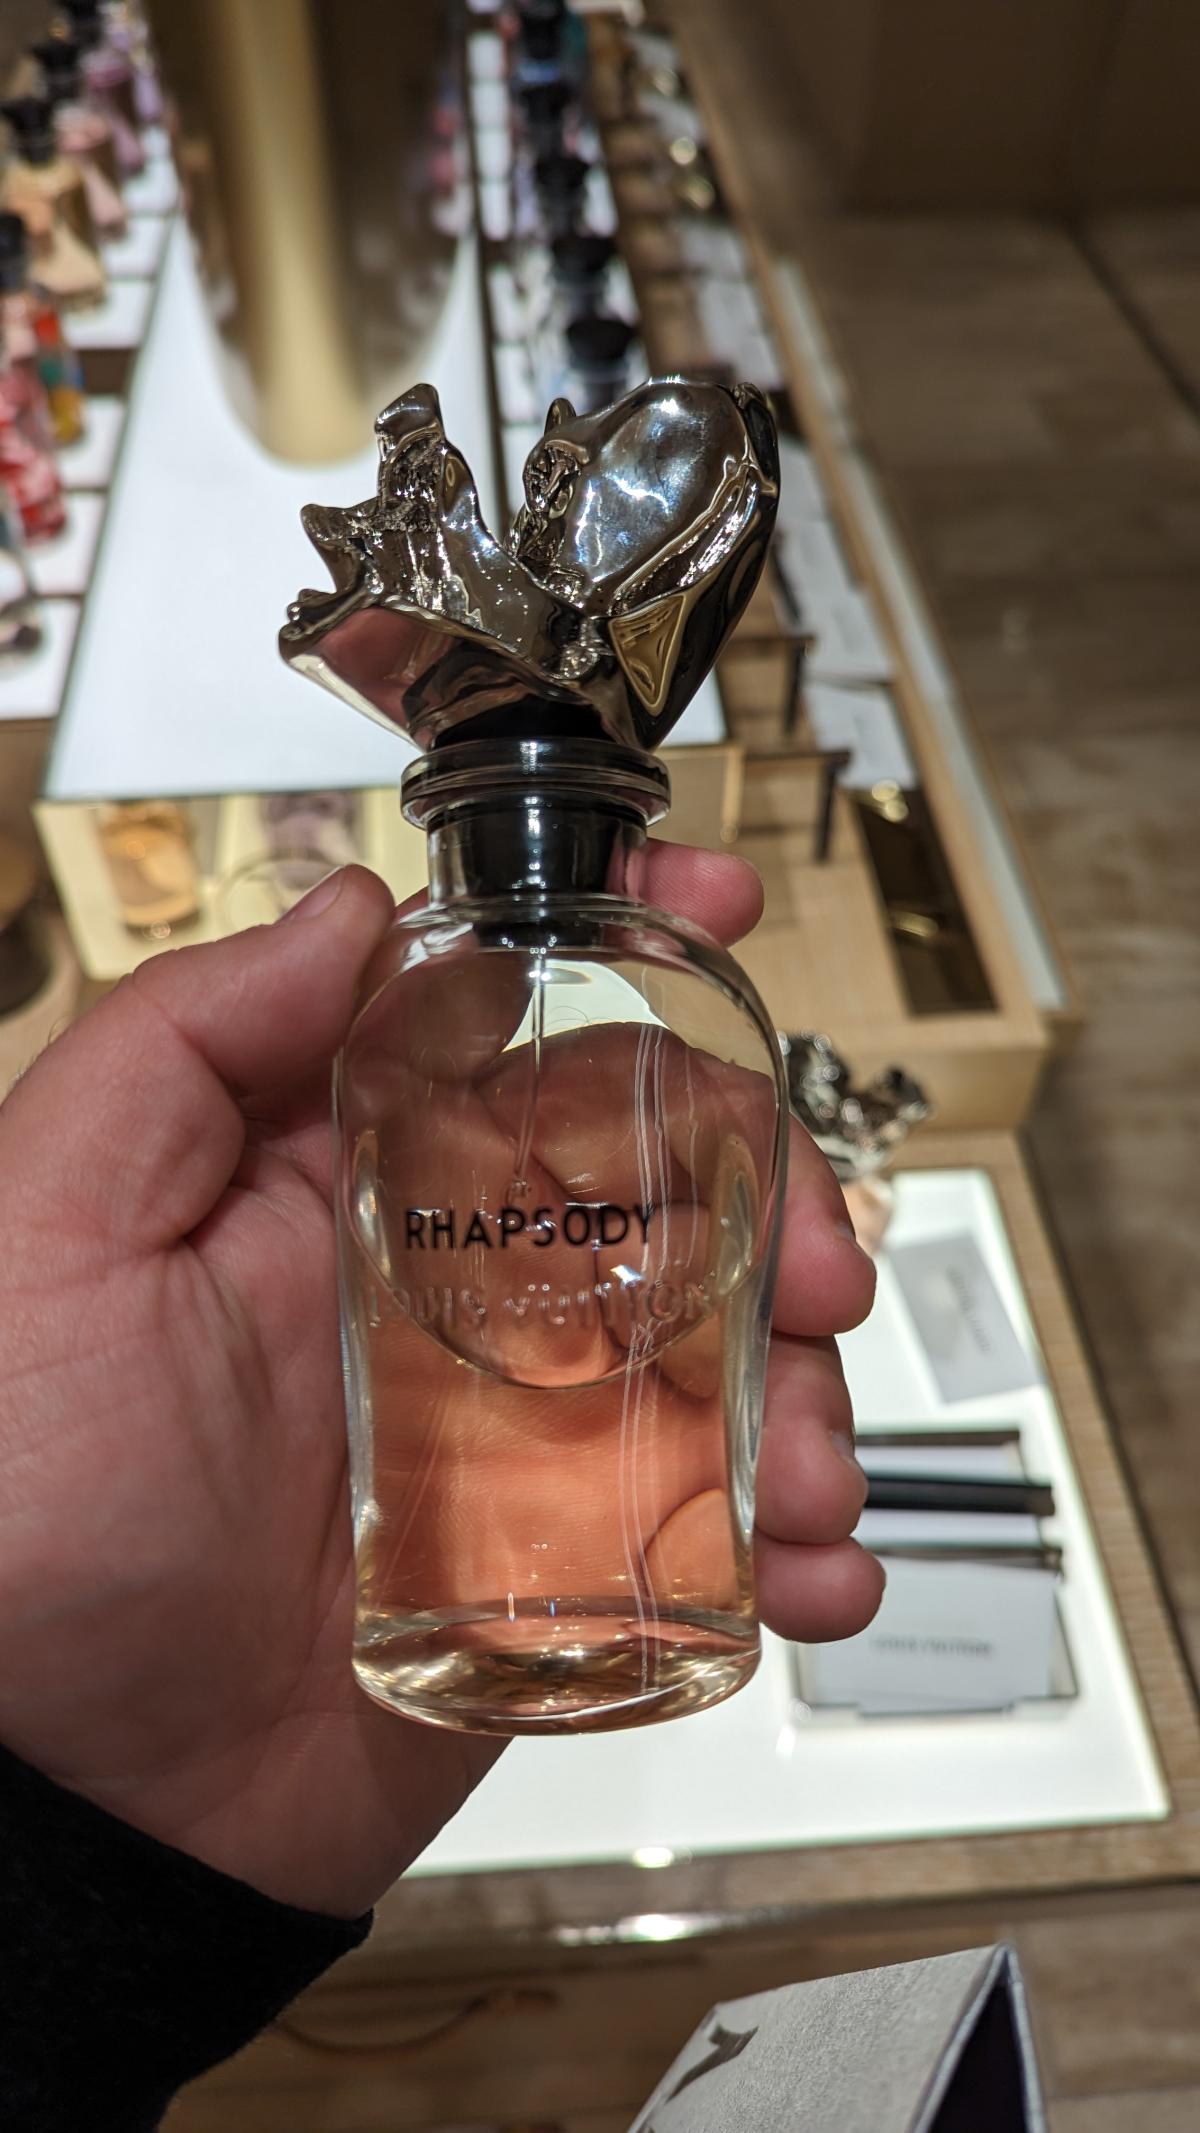 LOUIS VUITTON fragrance review RHAPSODY - LV perfume - Can you hear the  Rhapsody? 